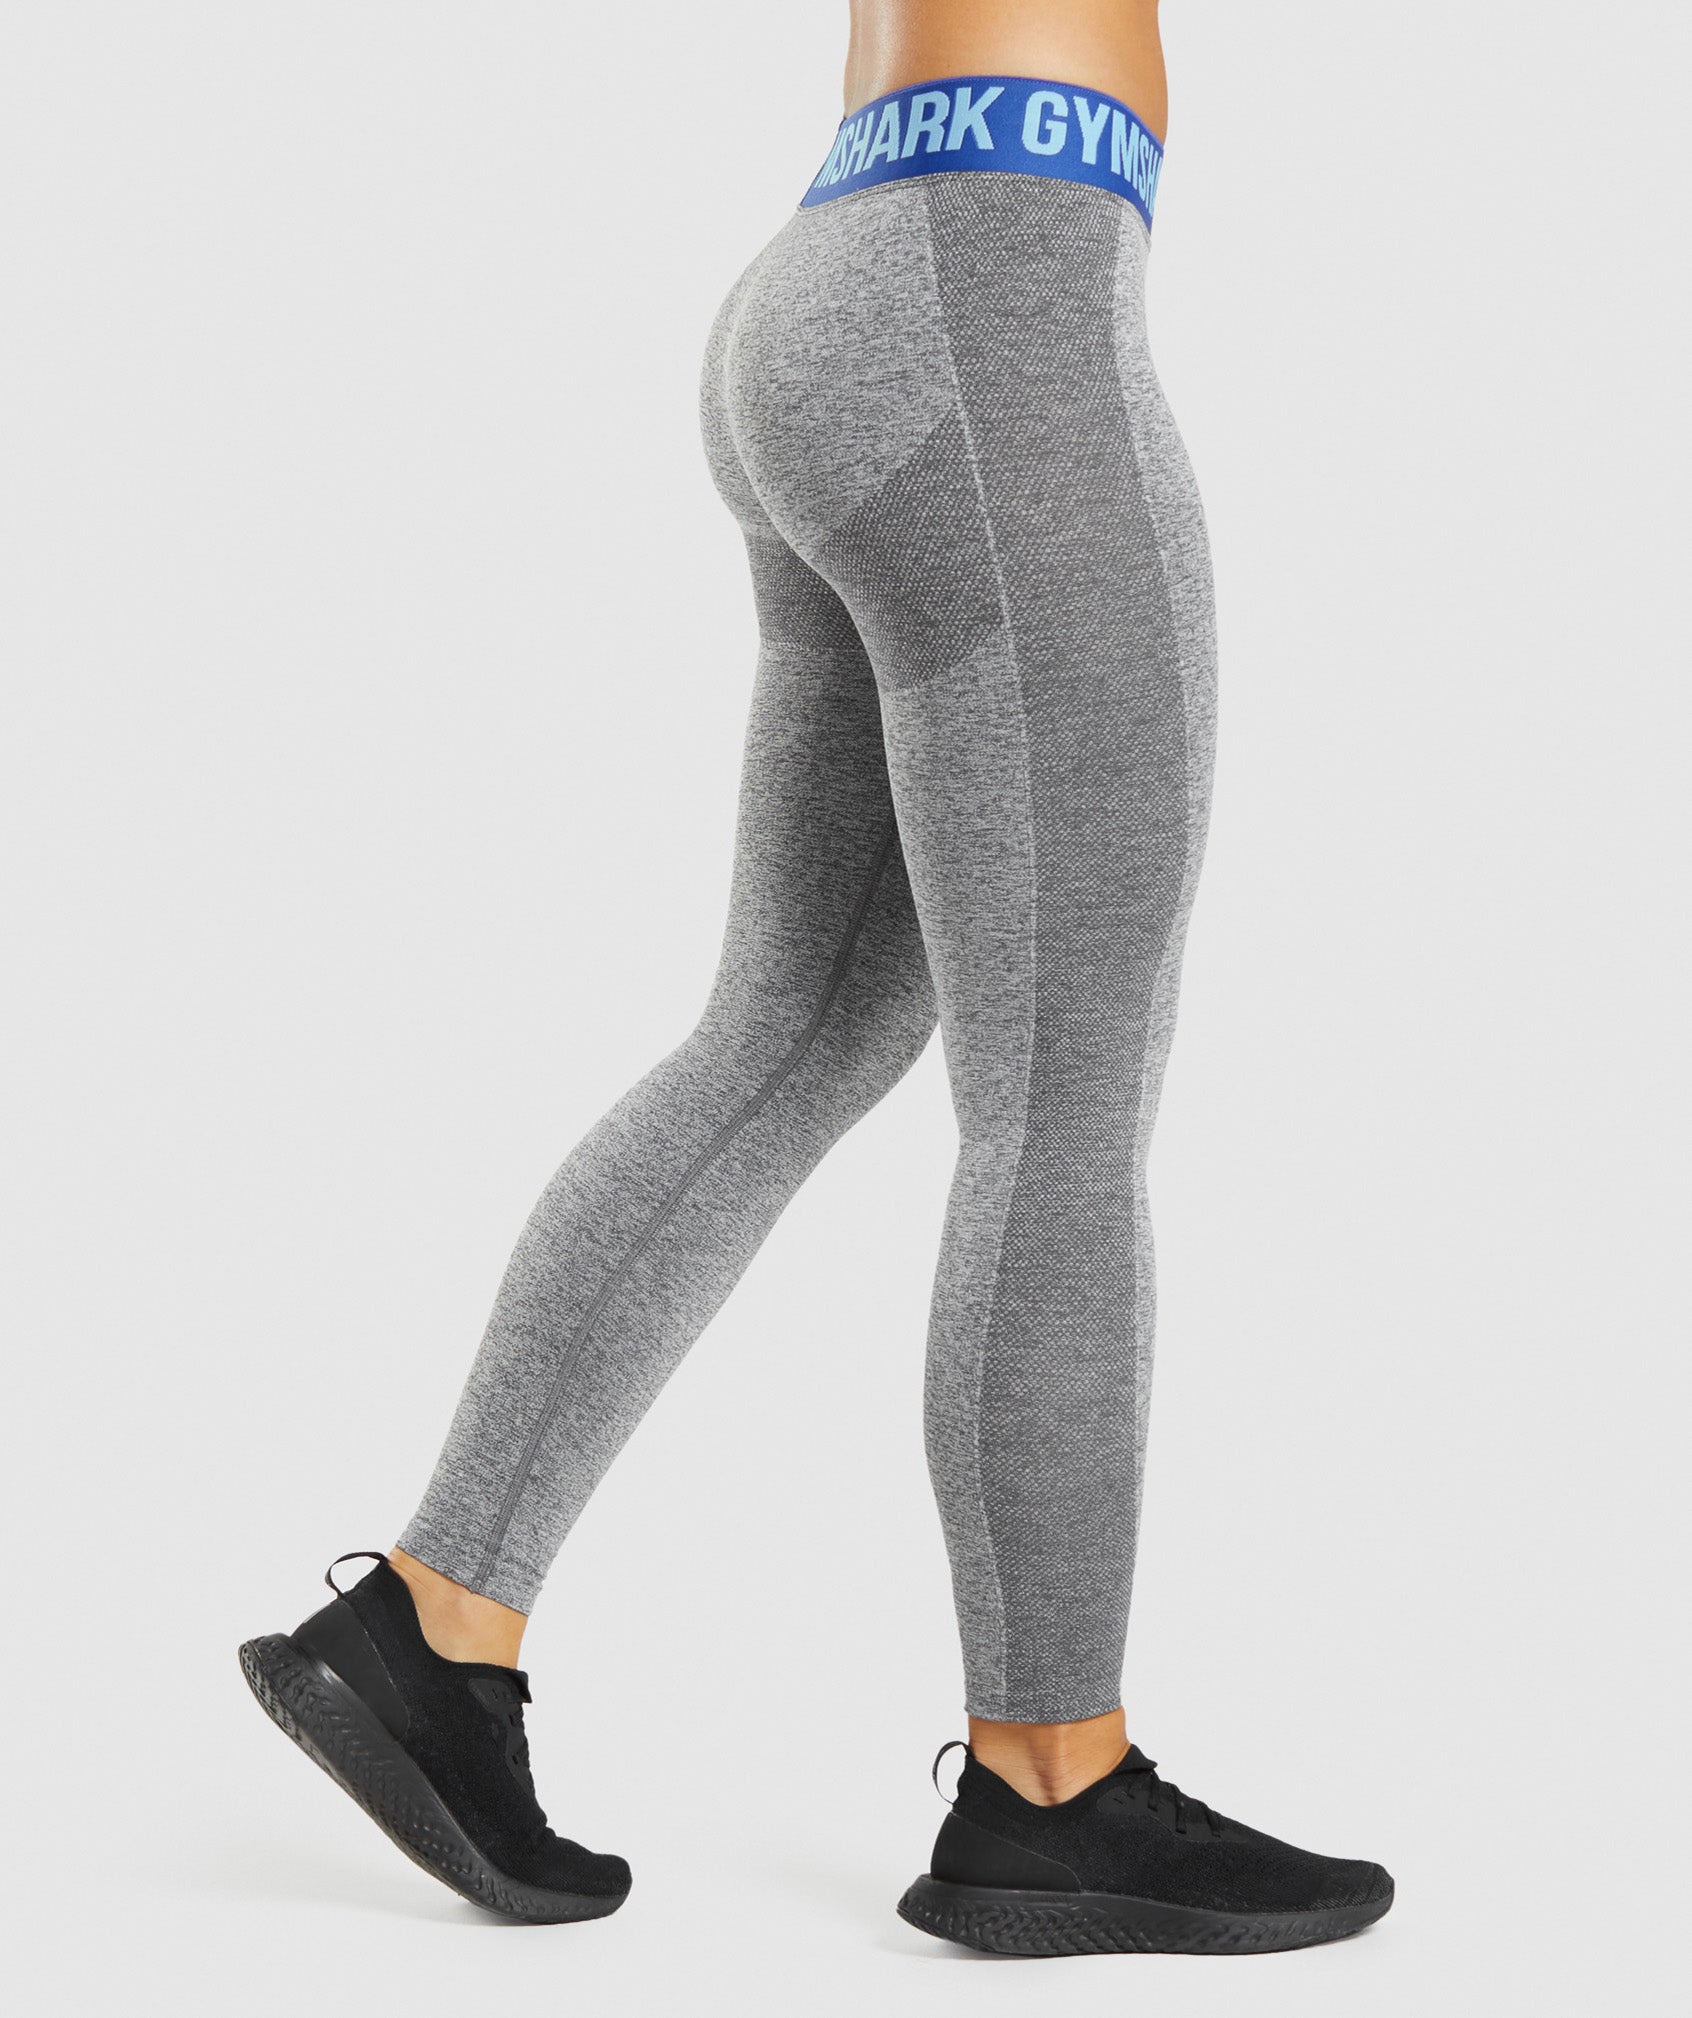 Gym Shark XS Women's Flex Leggings Pants Tights Turquoise Gray